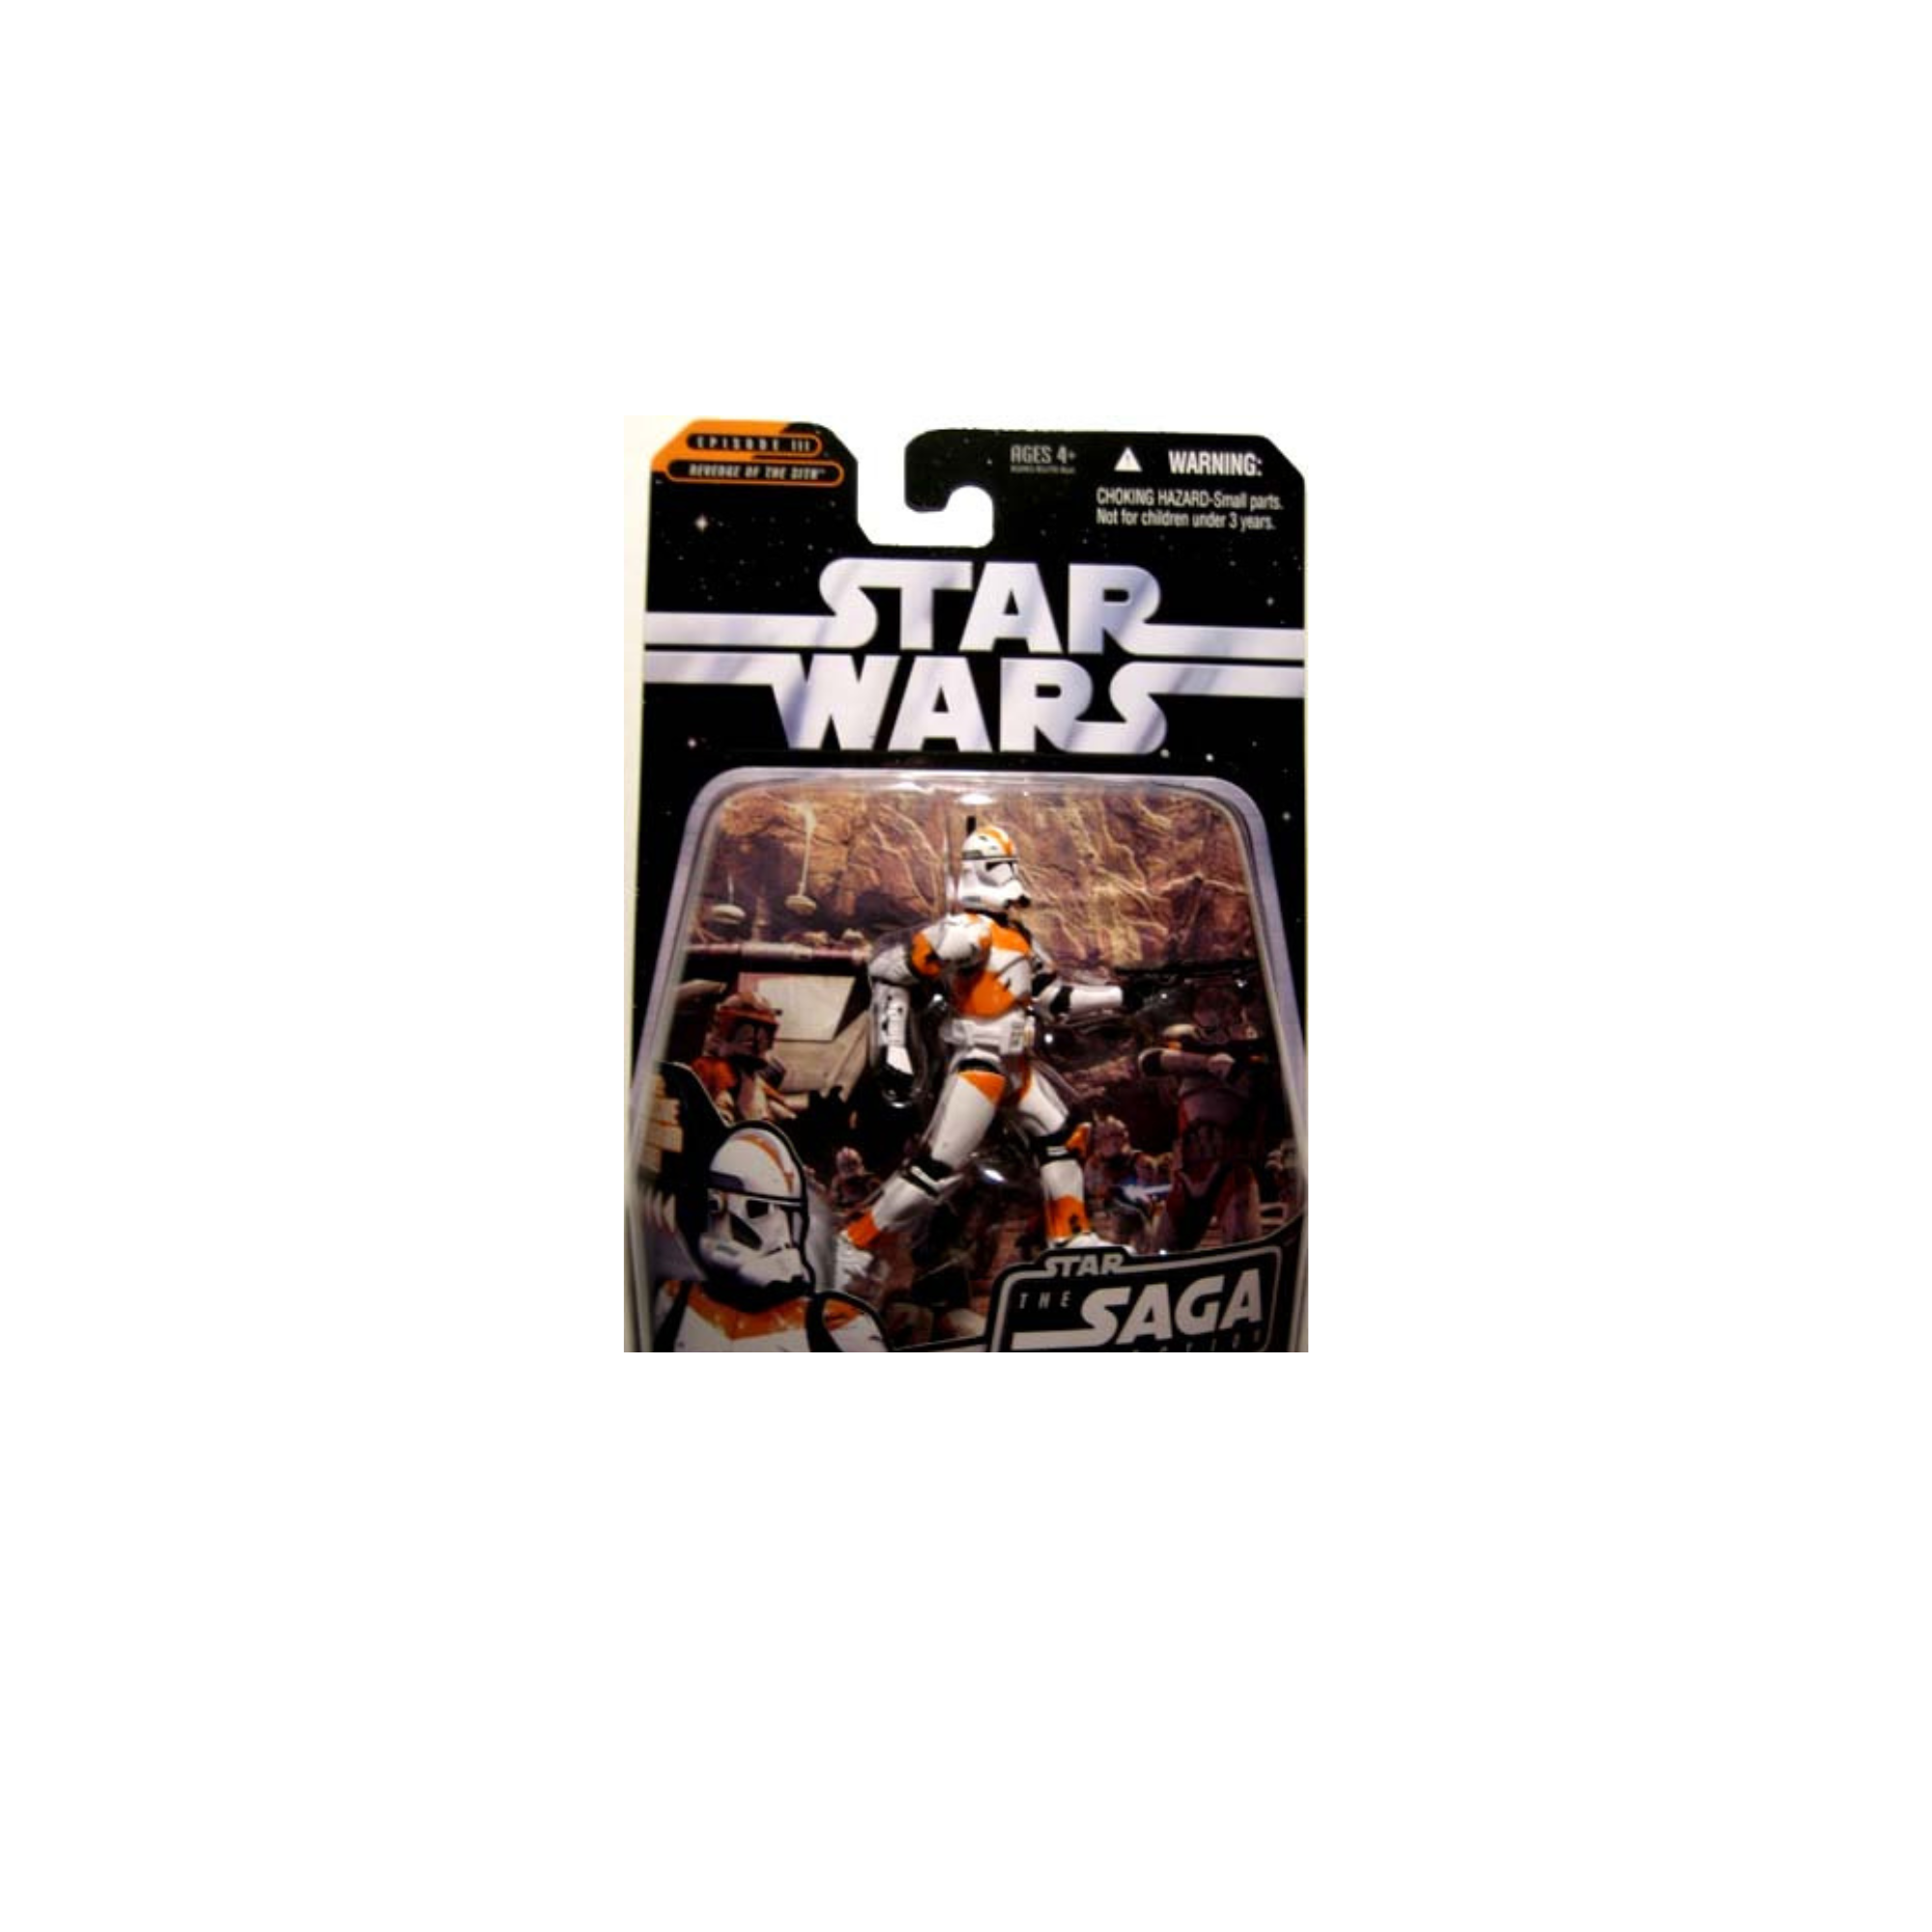 Star Wars Utapau Clone Trooper SAGA 2006